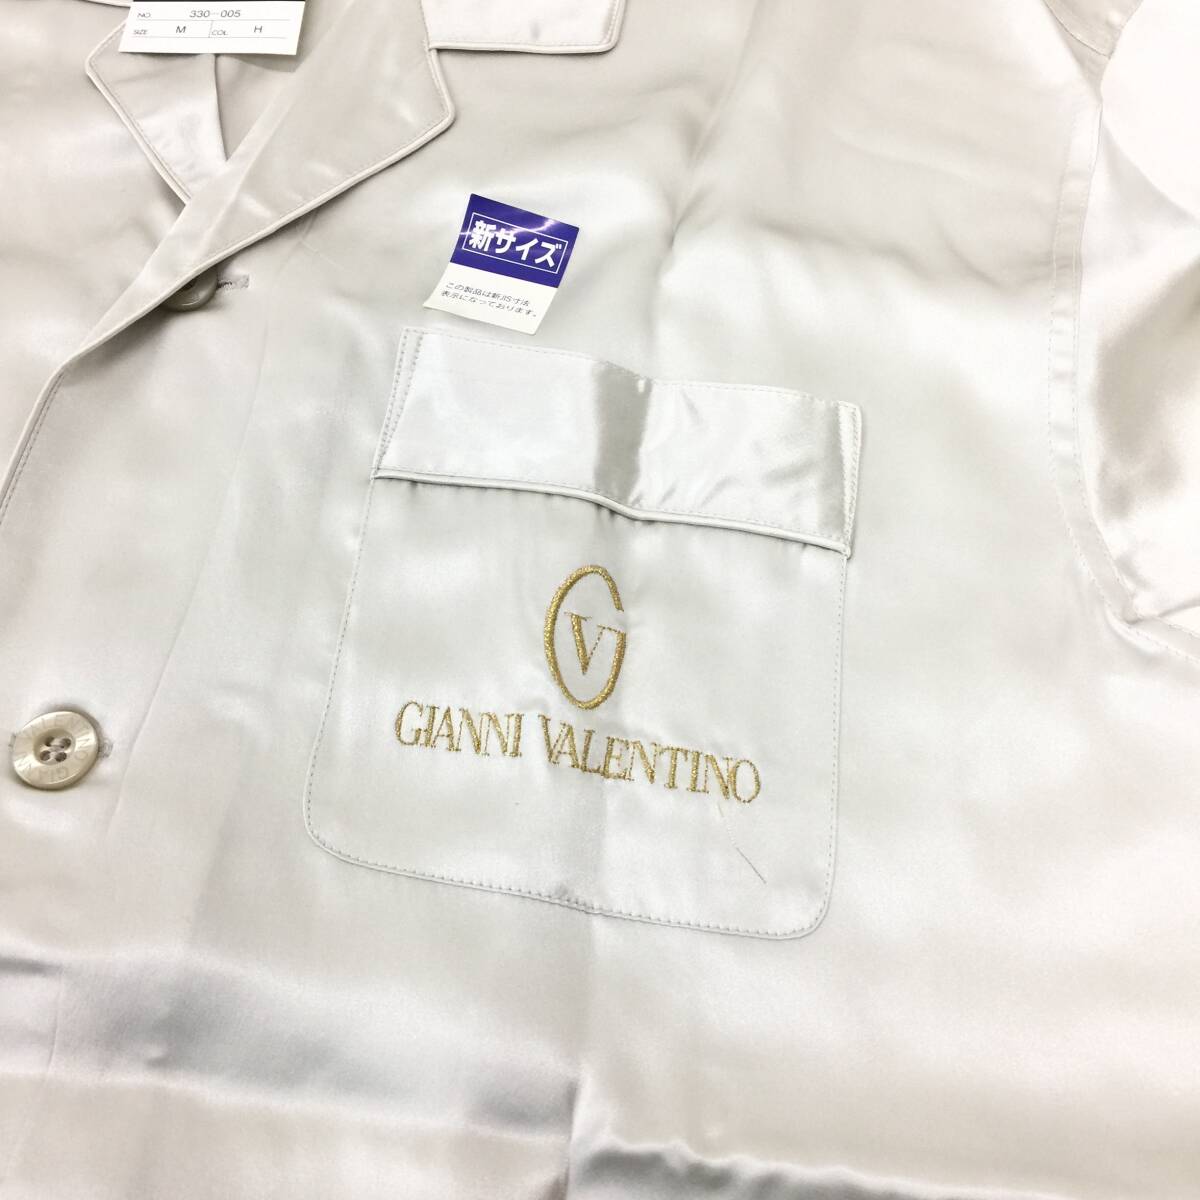 81 unused GIANNI VALENTINO Valentino silk 100% pyjamas room wear Night wear men's M top and bottom set long sleeve silk silk gray series 